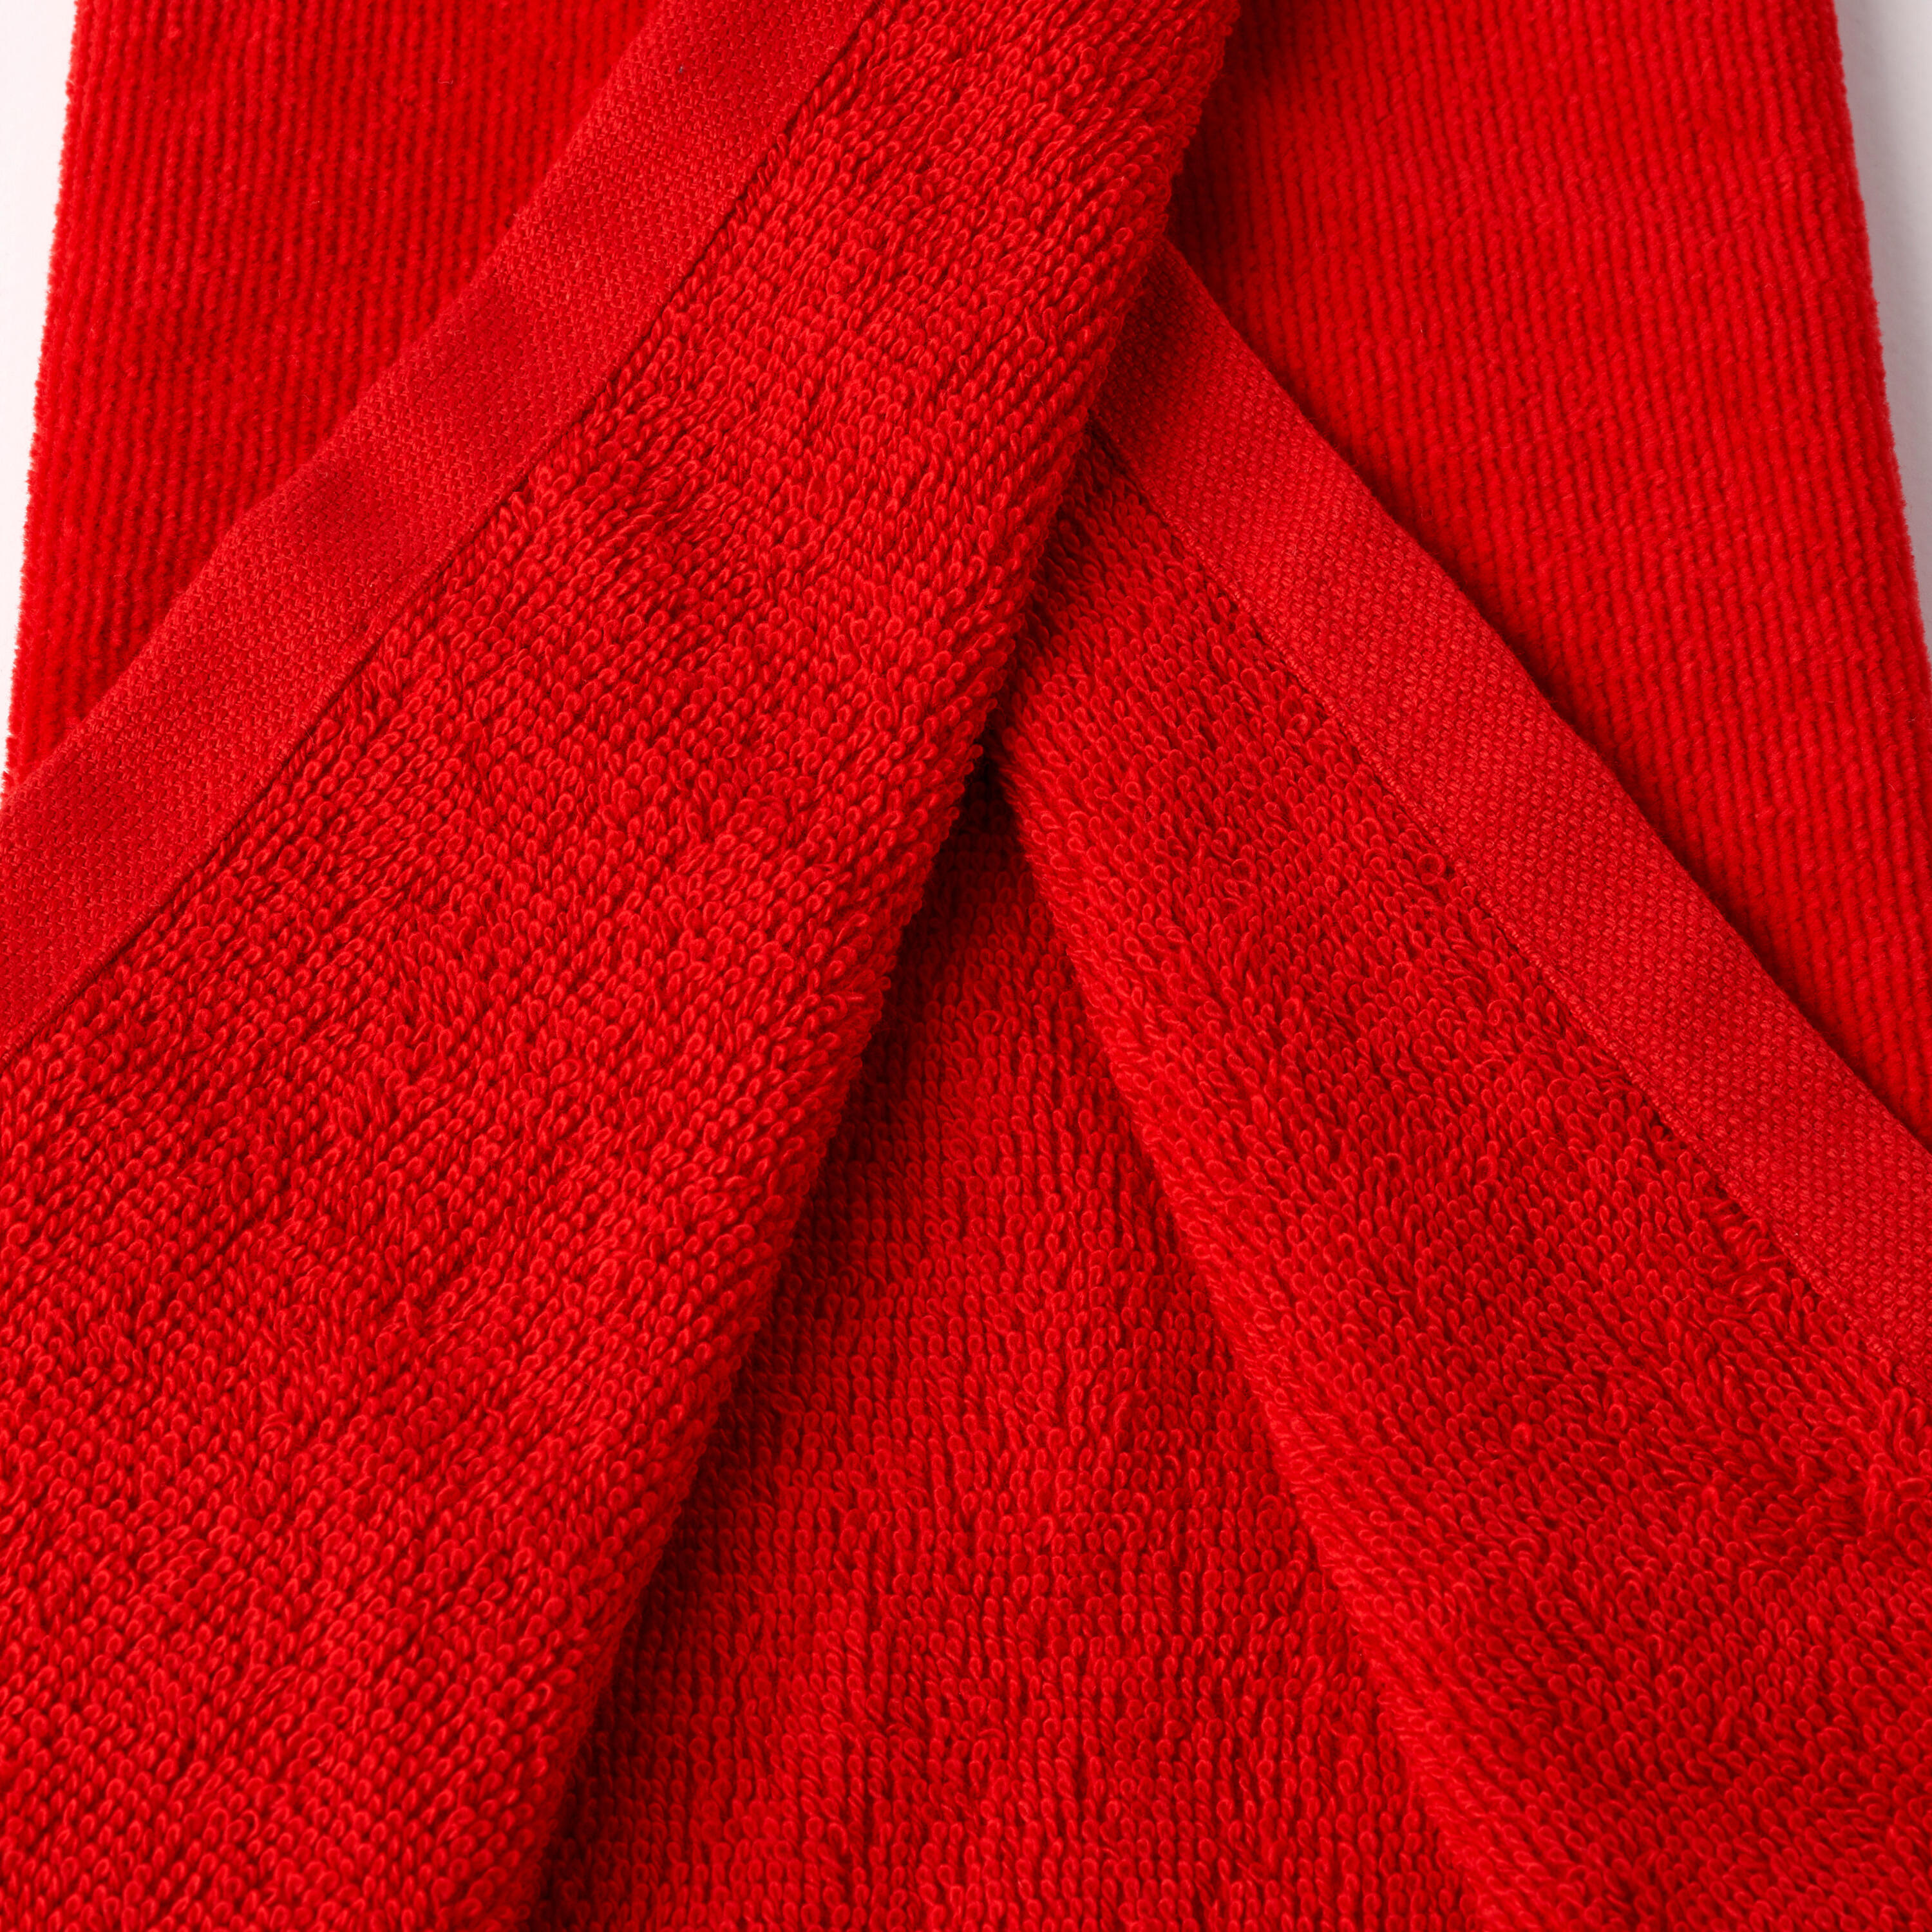 TRI-FOLD GOLF TOWEL - INESIS RED 3/9